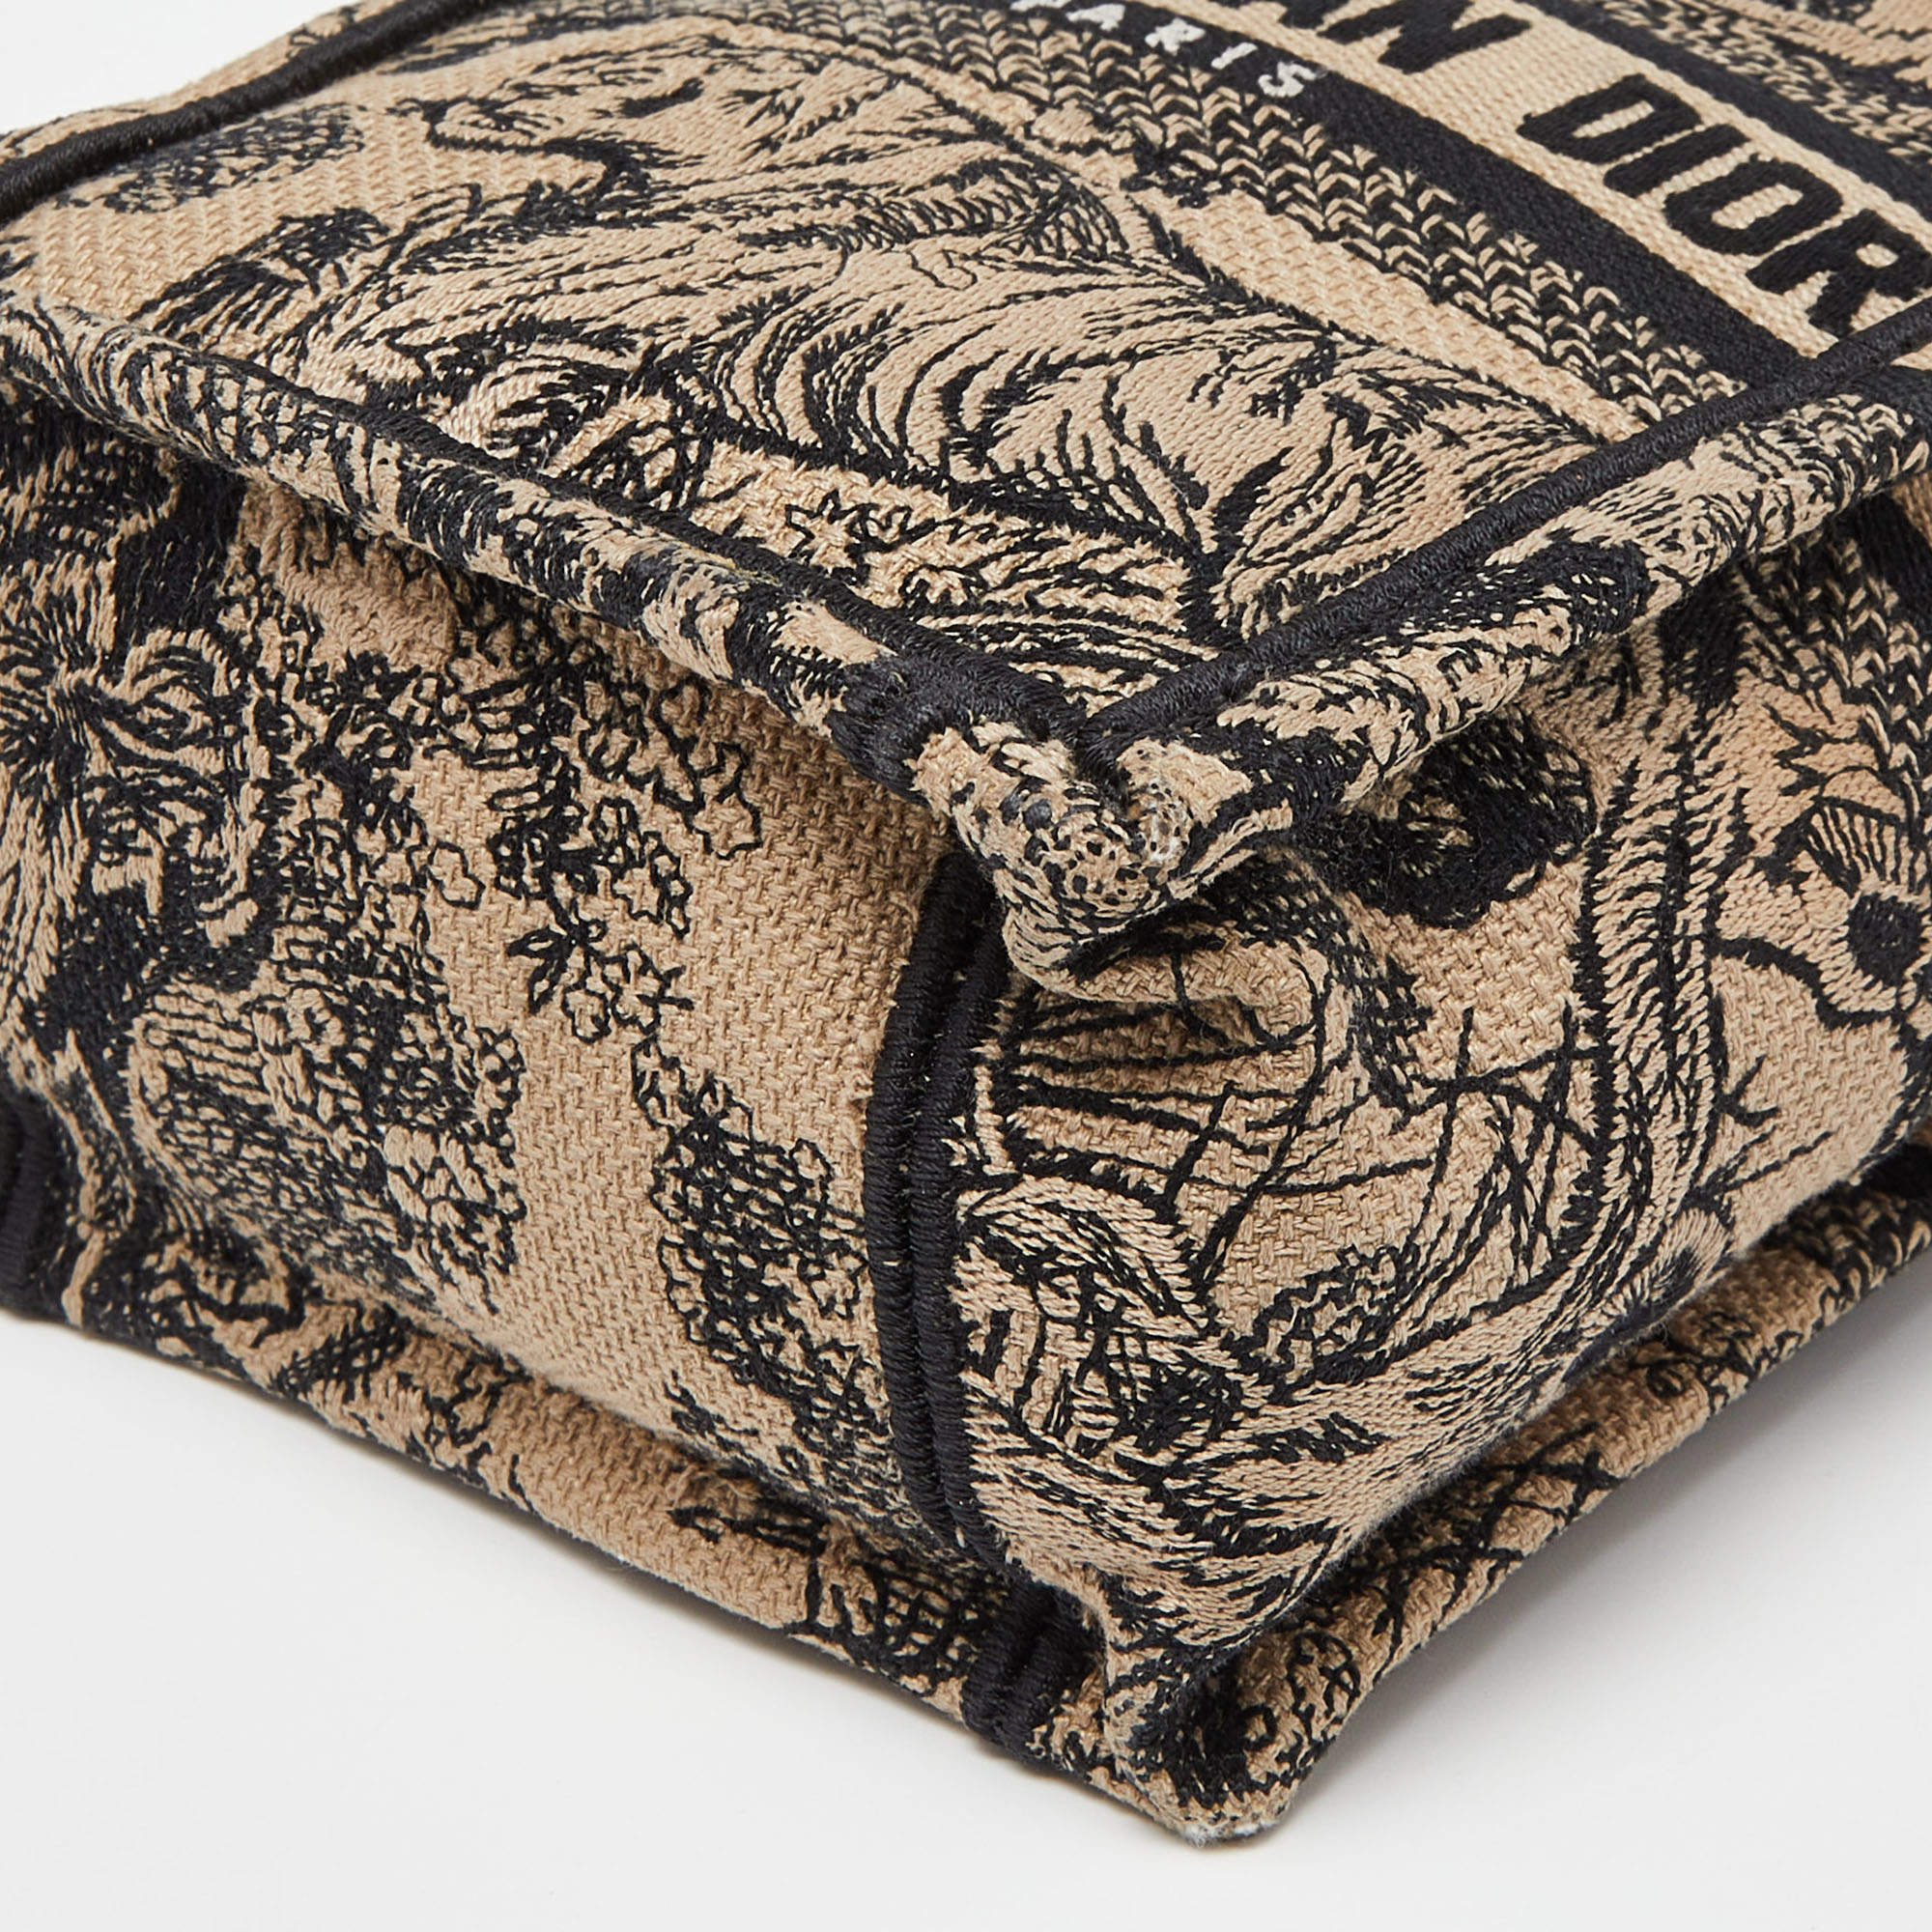 Mini Dior Book Tote Phone Bag White and Black Toile de Jouy Voyage  Embroidery (13 x 18 x 5 cm)